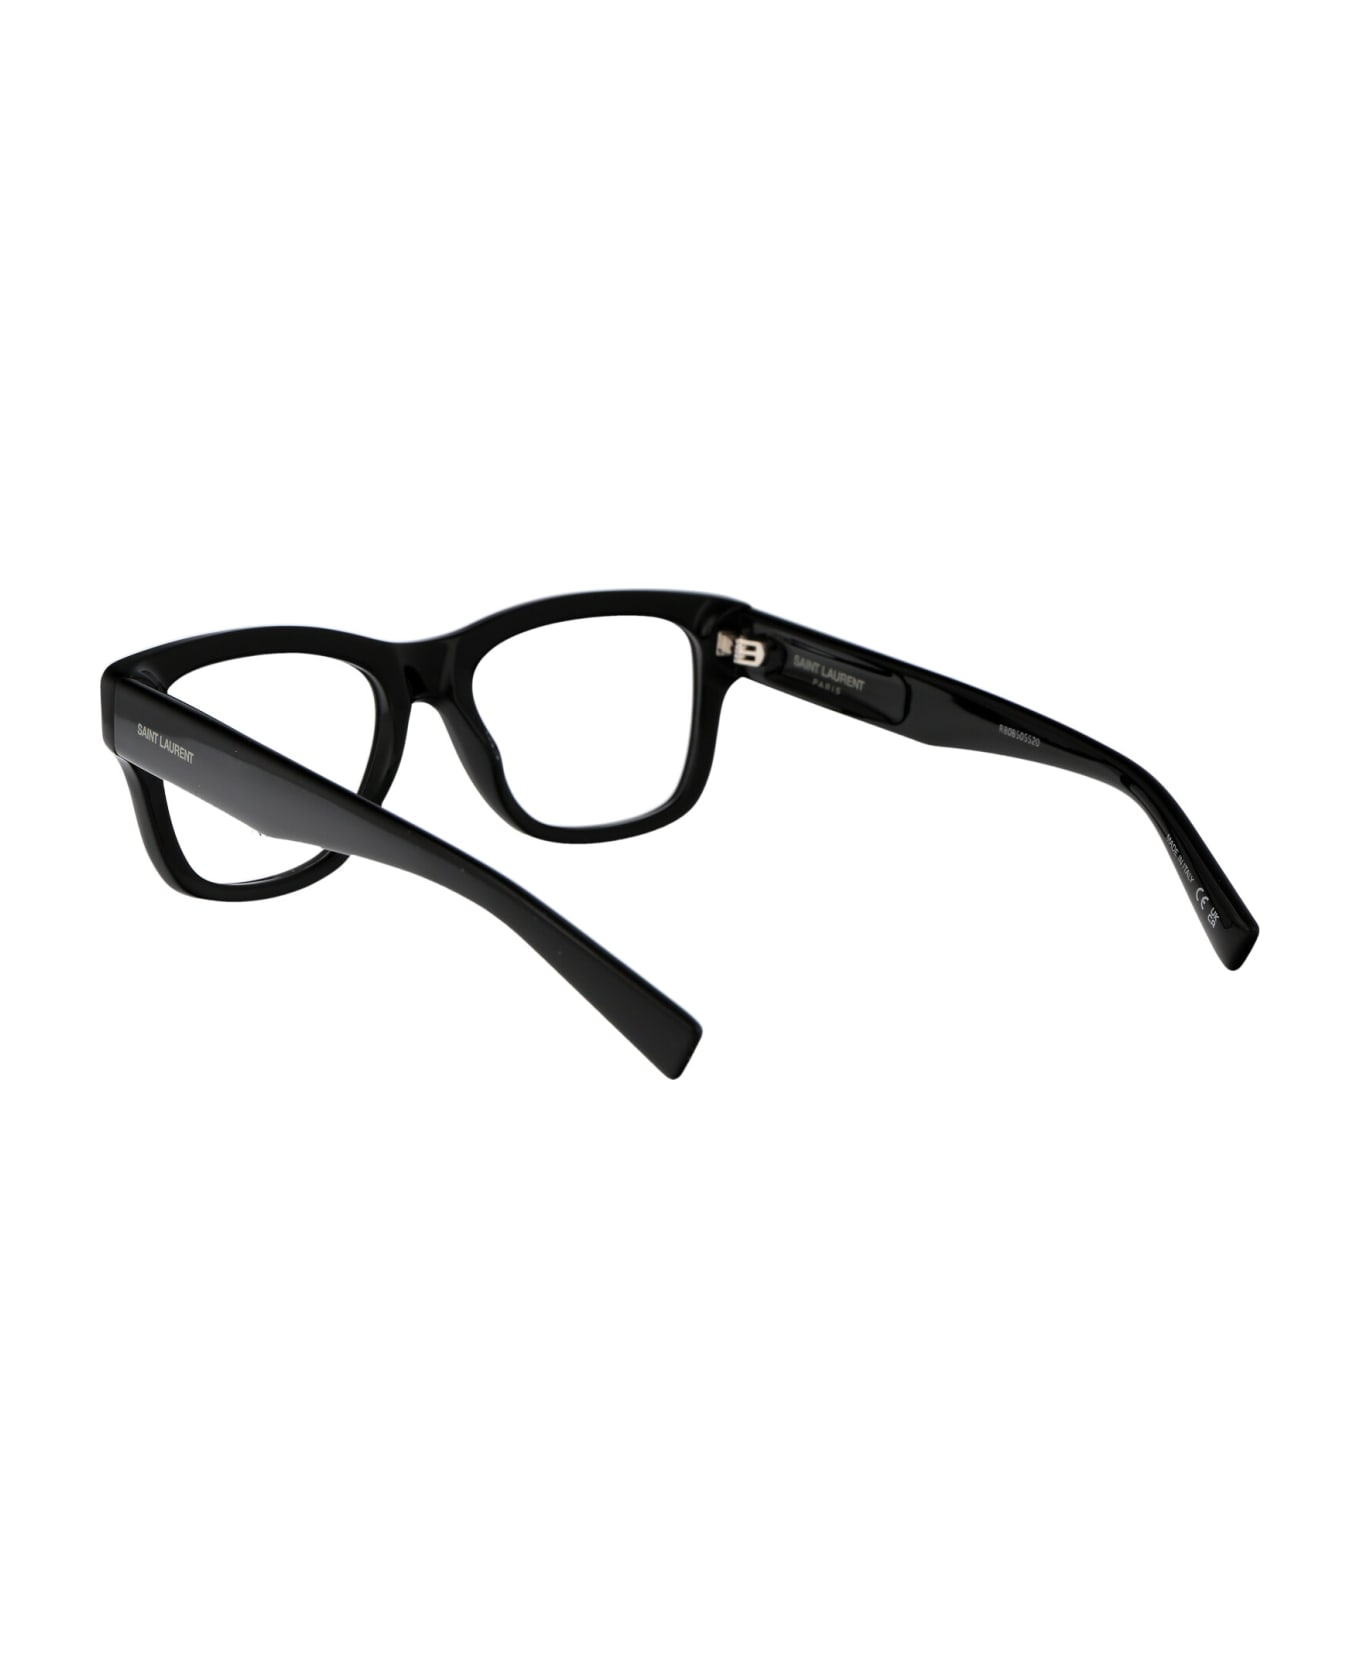 Saint Laurent Eyewear Sl 677 Glasses - 001 BLACK BLACK TRANSPARENT